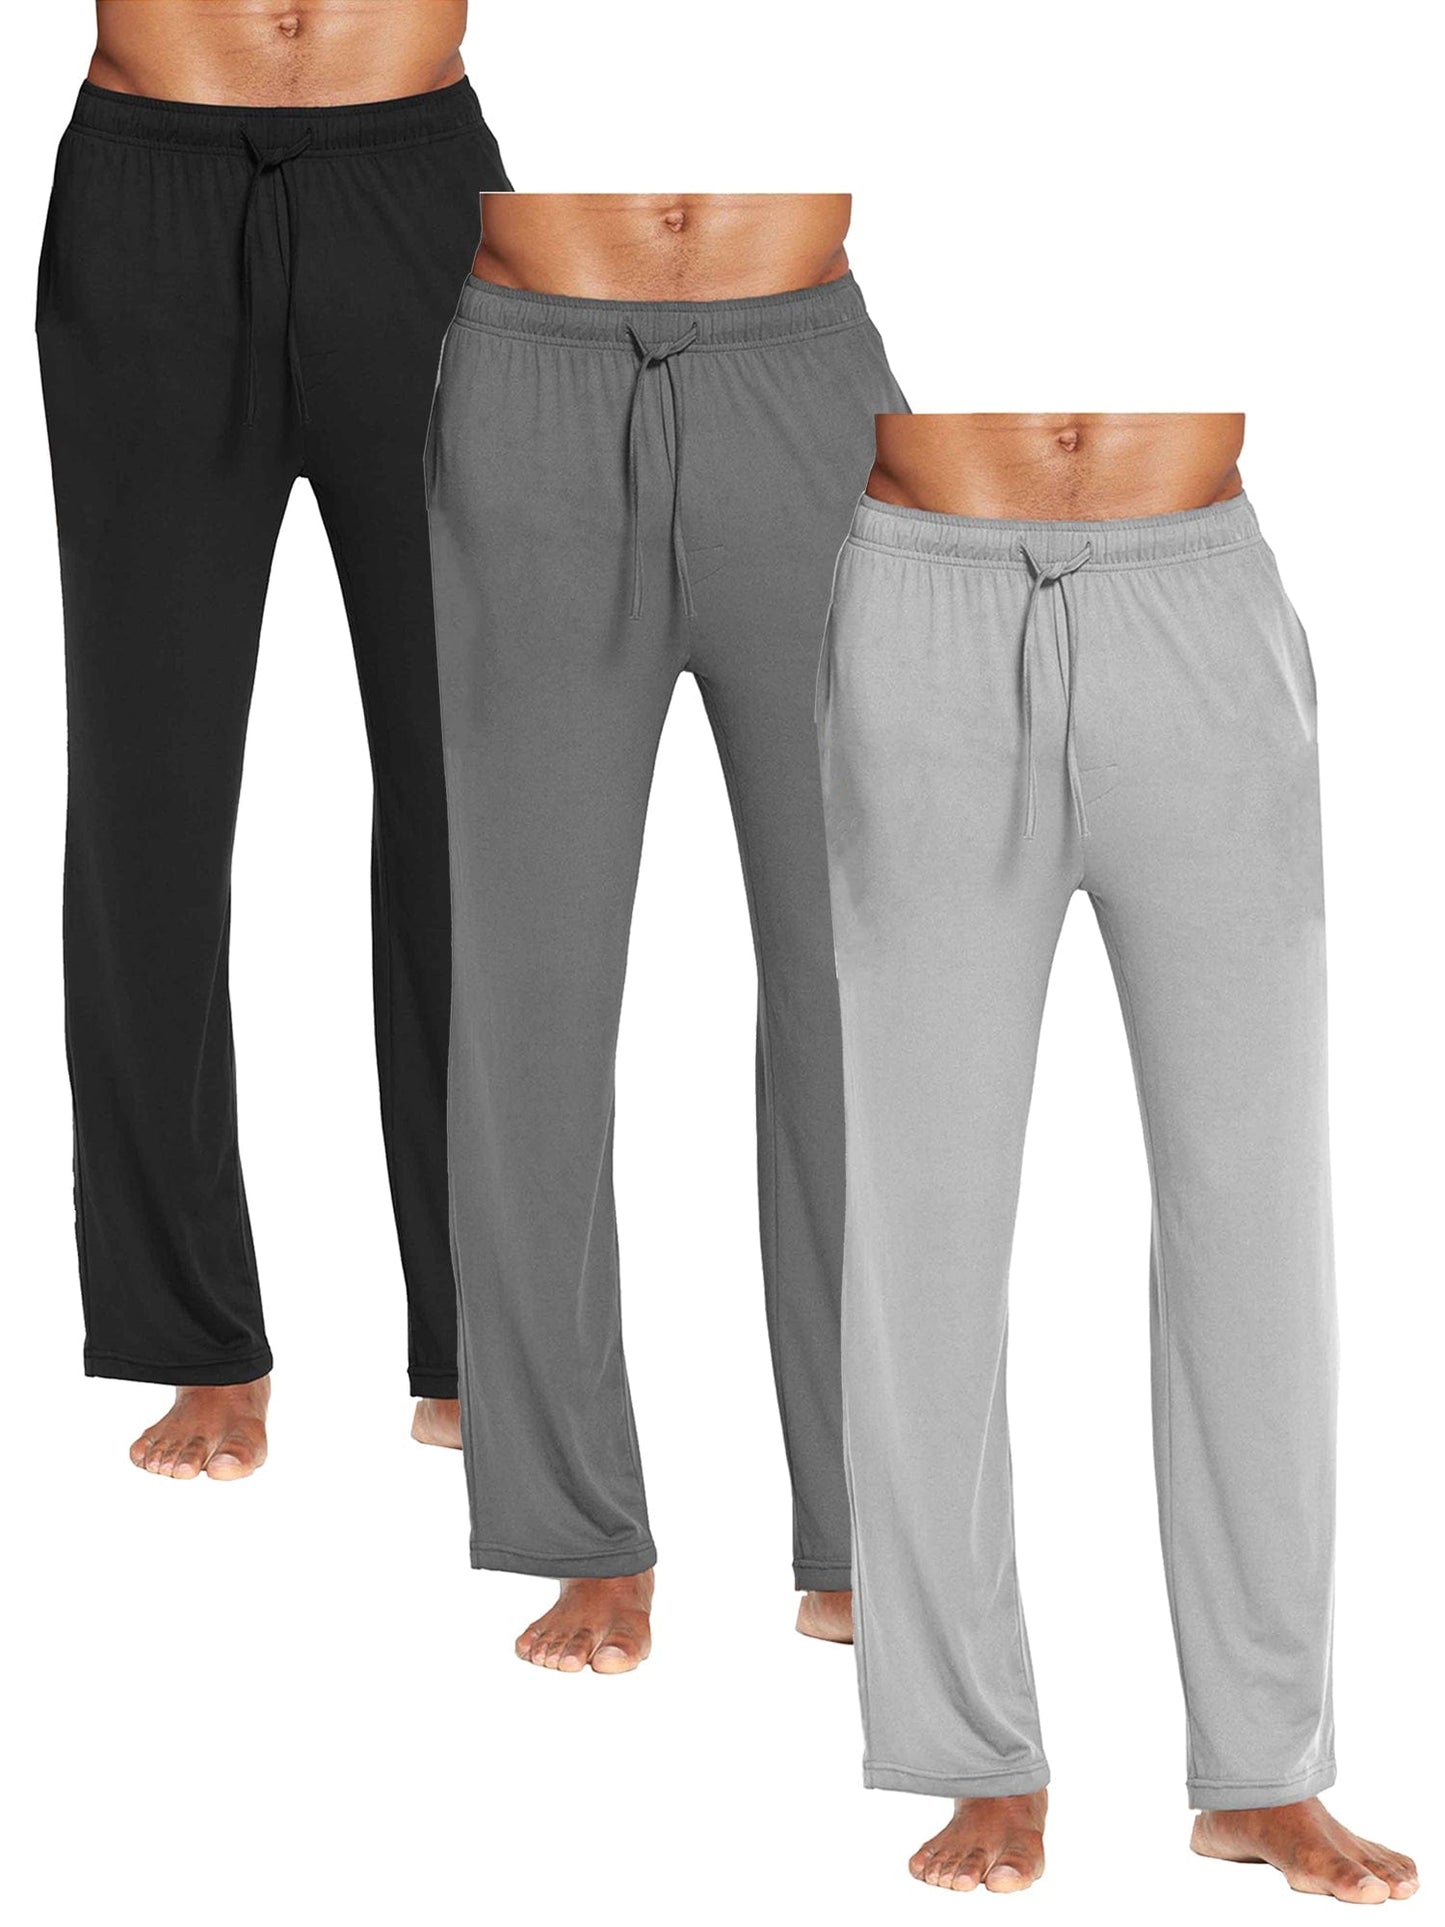 3-Pack Men's Classic Lounge Pants (Sizes, S-3XL)